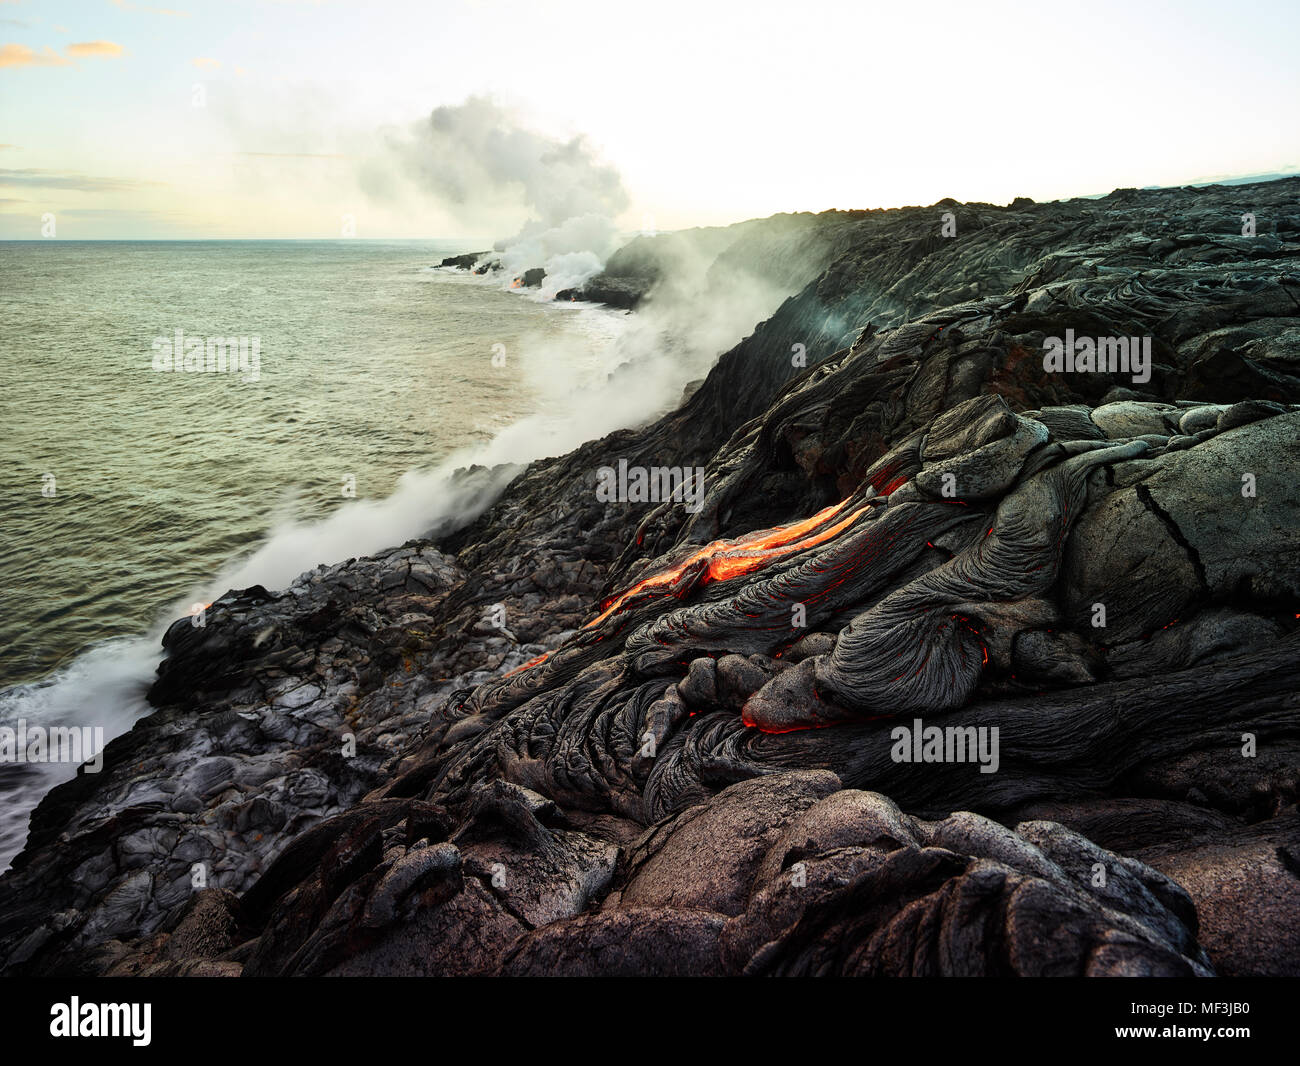 Hawaii, Big Island, Hawai'i Volcanoes National Park, lava flowing into pacfic ocean Stock Photo